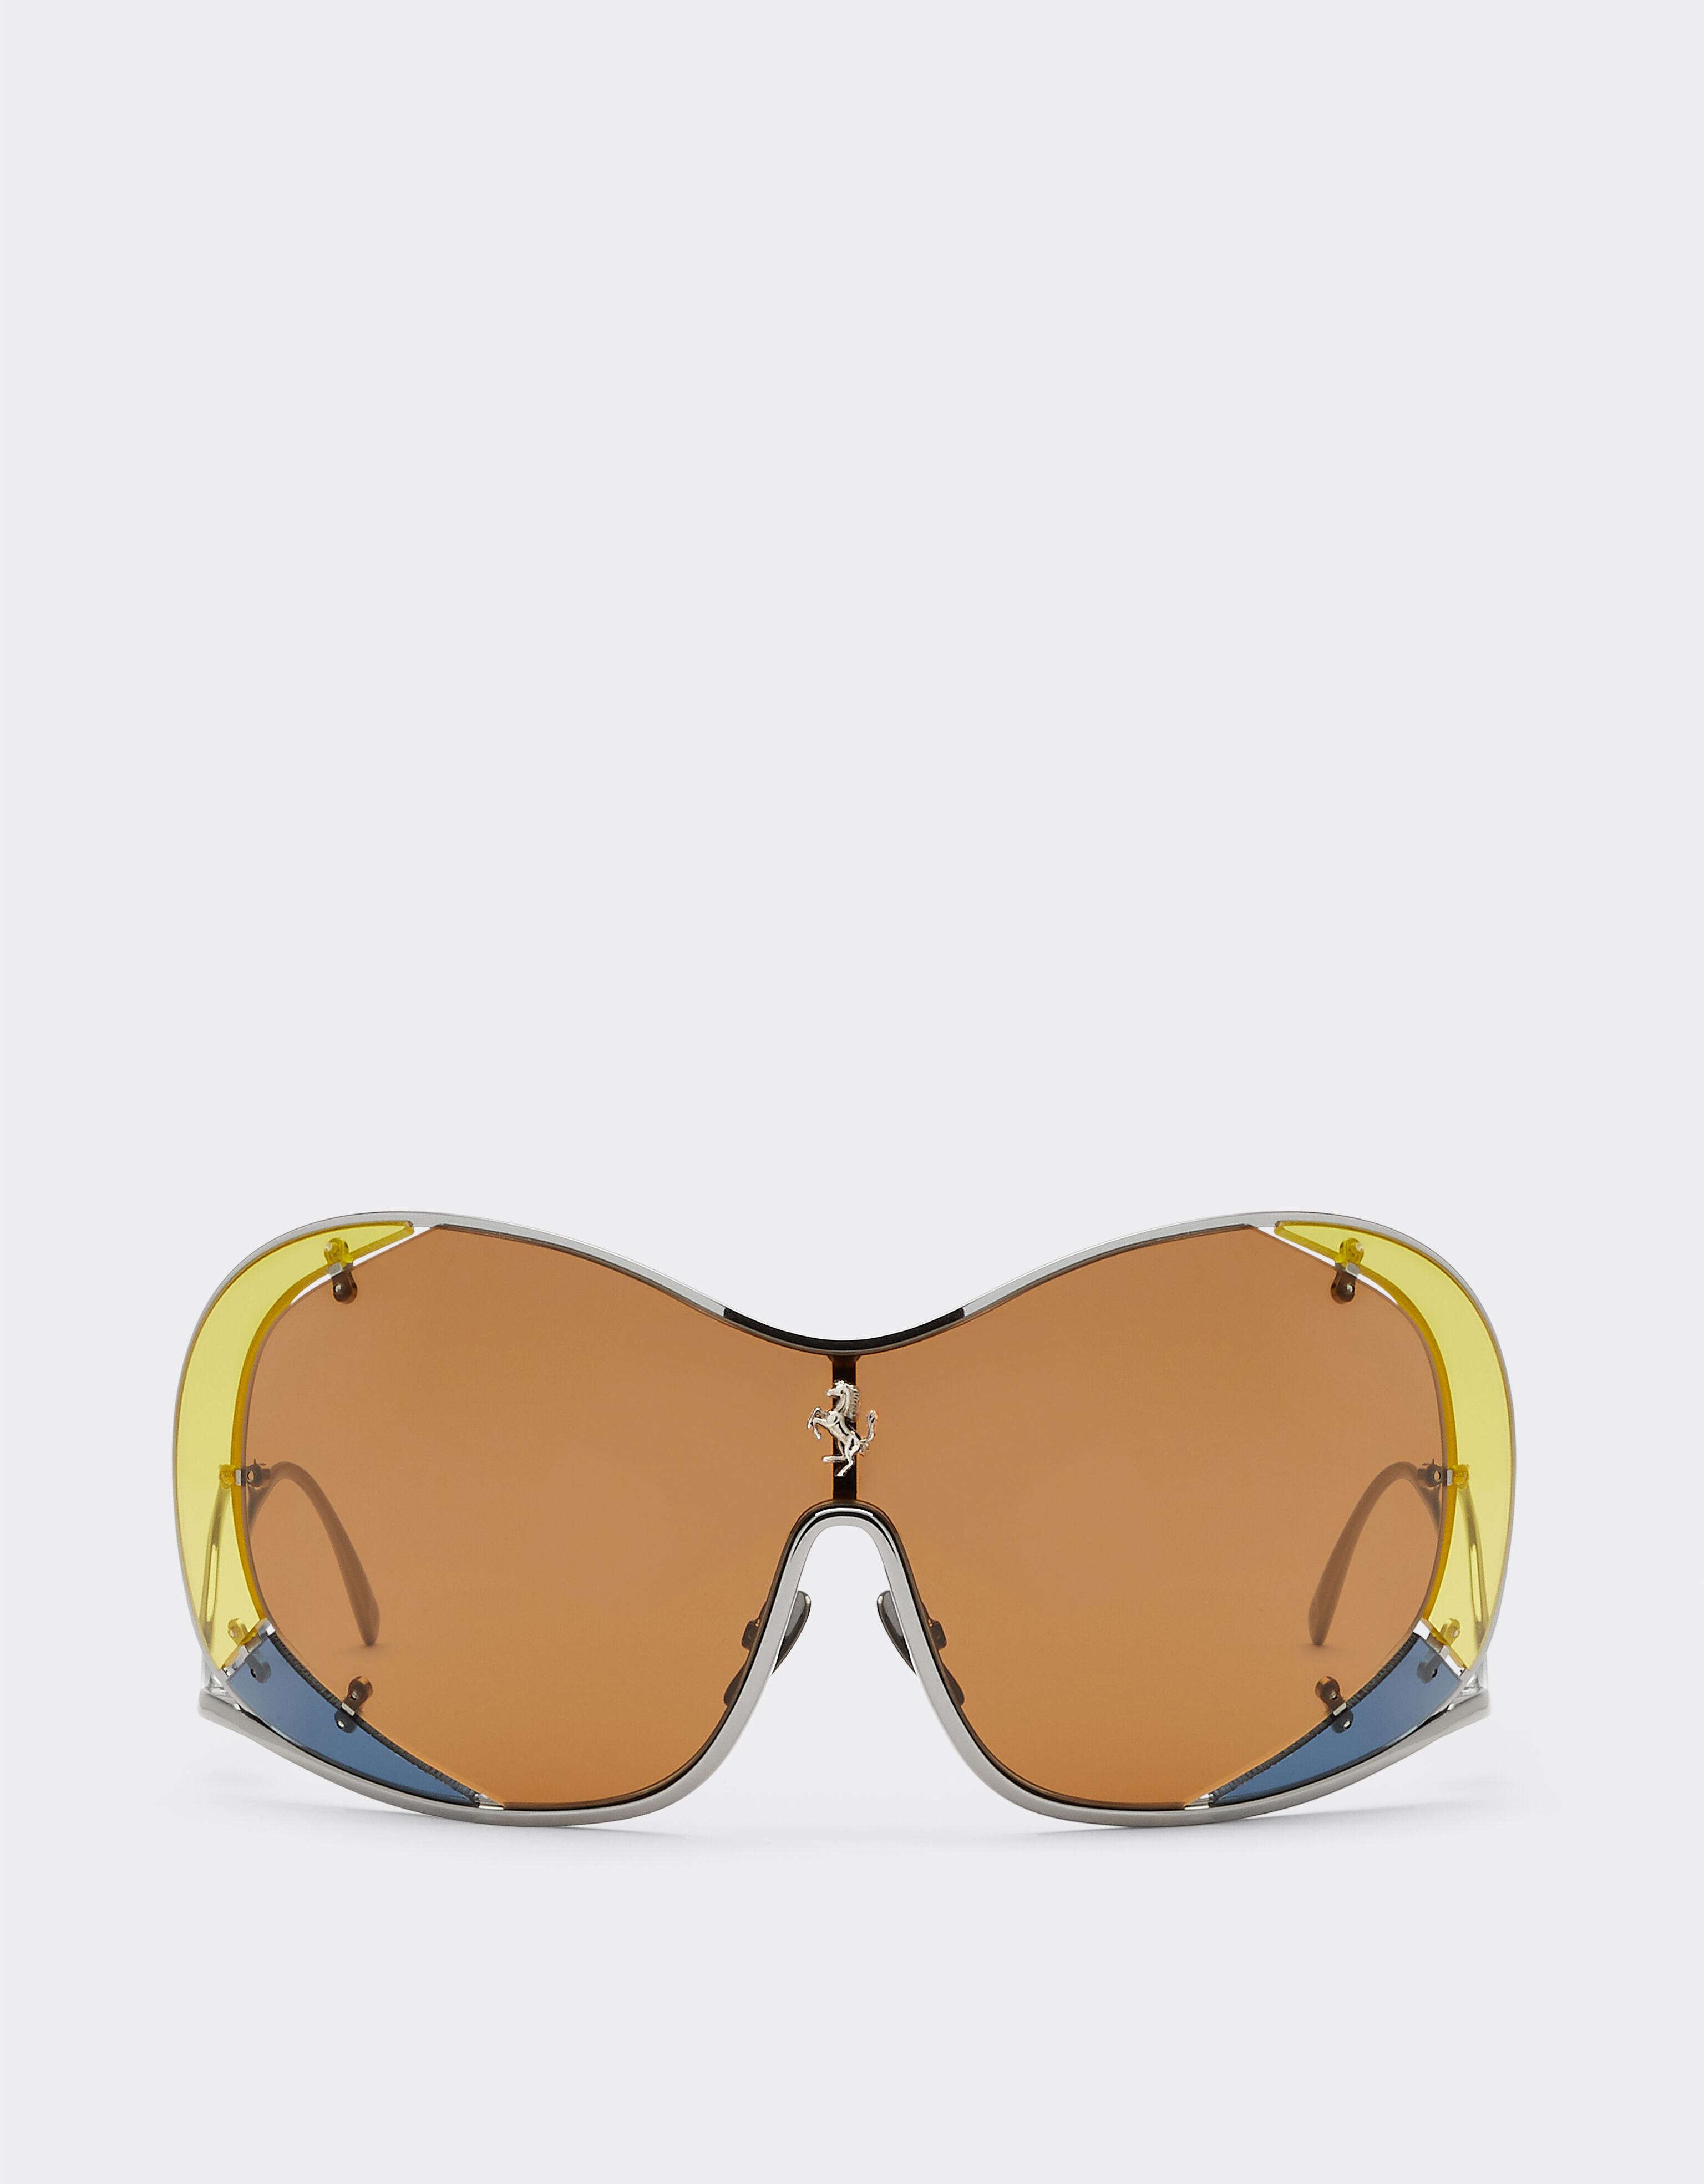 Ferrari Ferrari sunglasses with brown lenses Black Matt F1250f